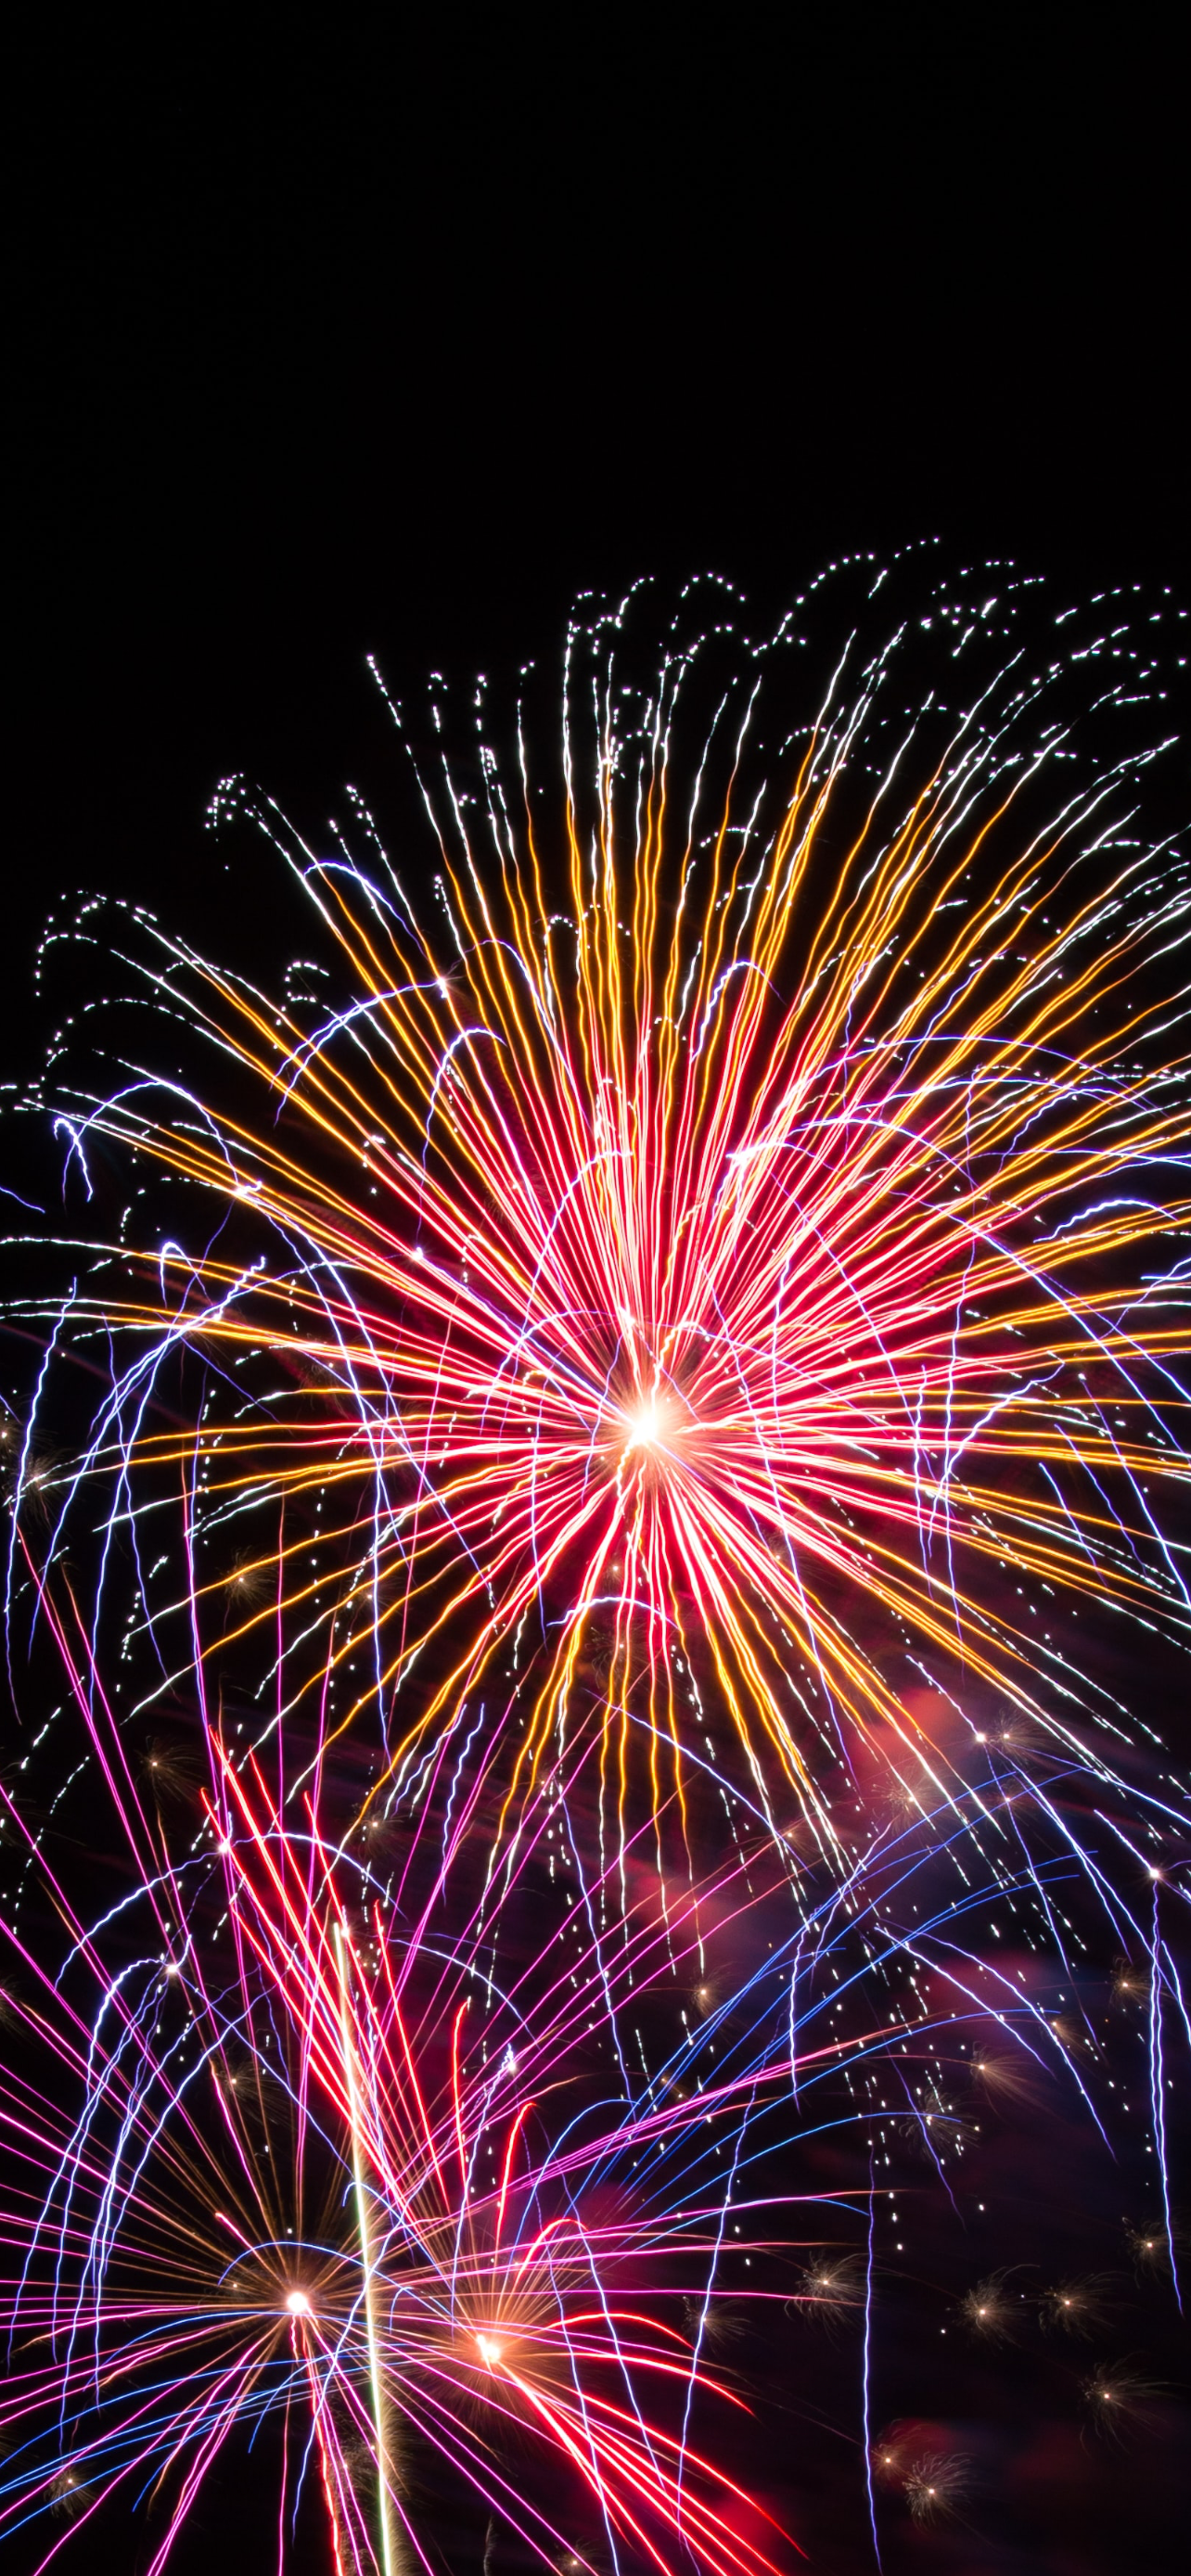 independence day iPhone fireworks wallpaper serge van neck colorful fireworks